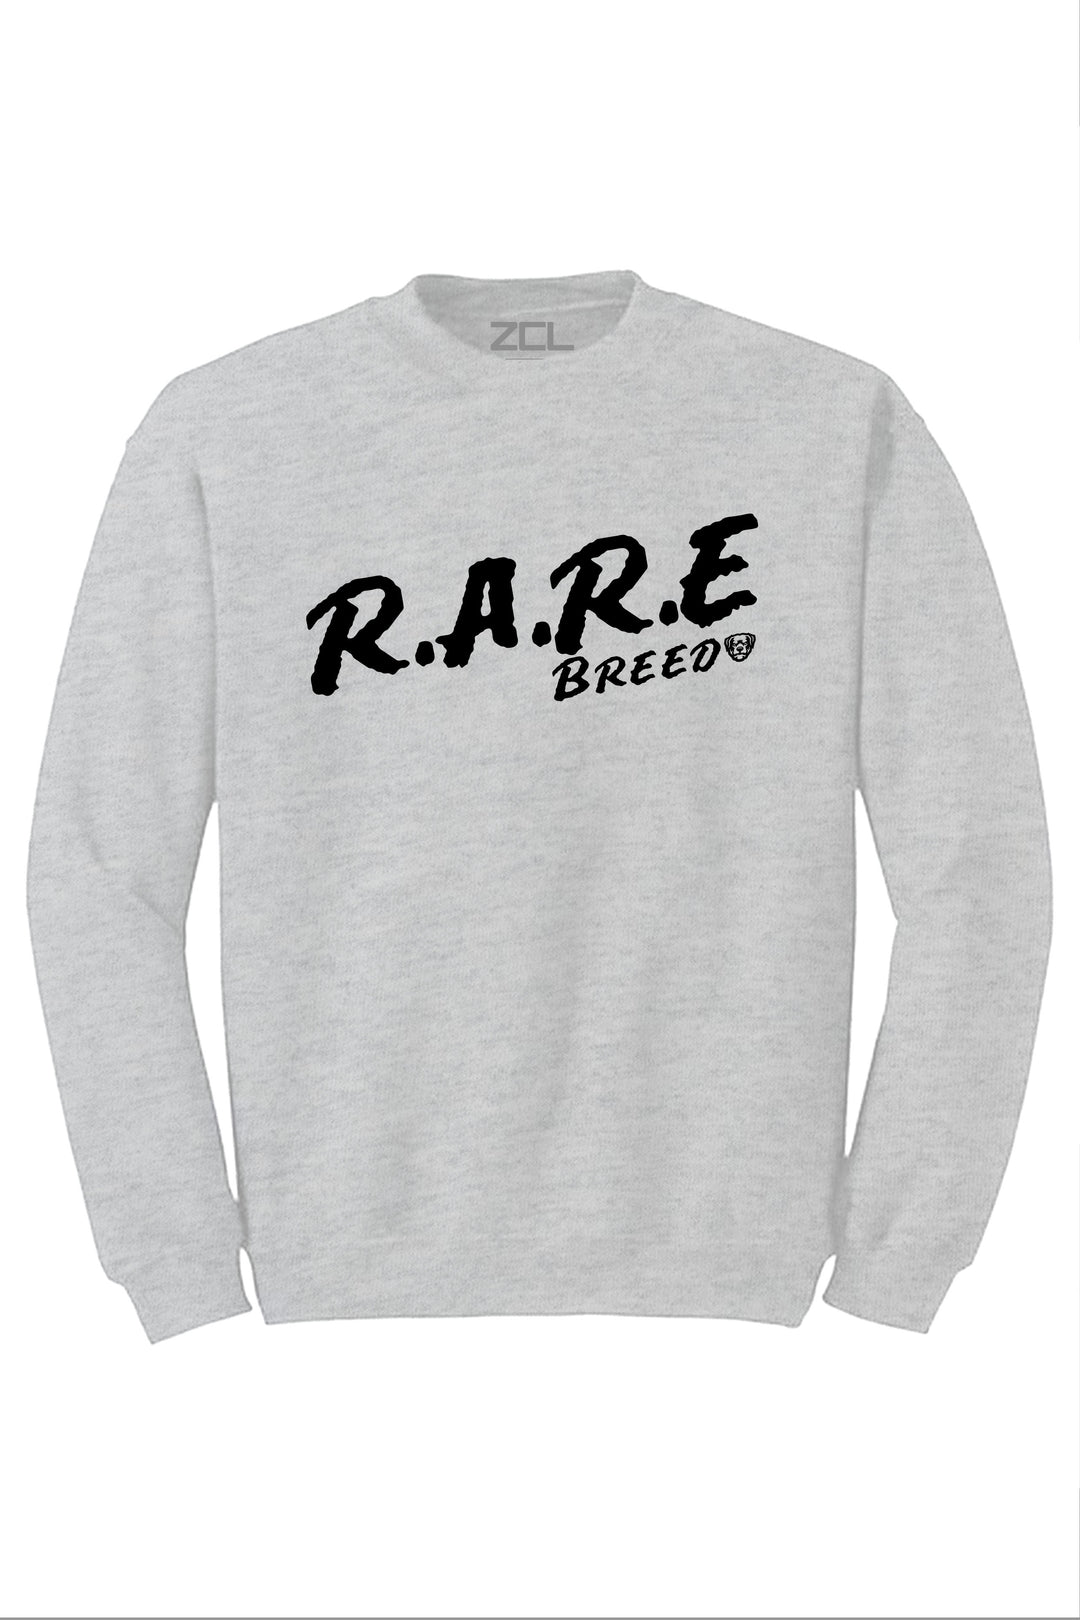 Rare Breed Crewneck Sweatshirt (Black Logo) - Zamage